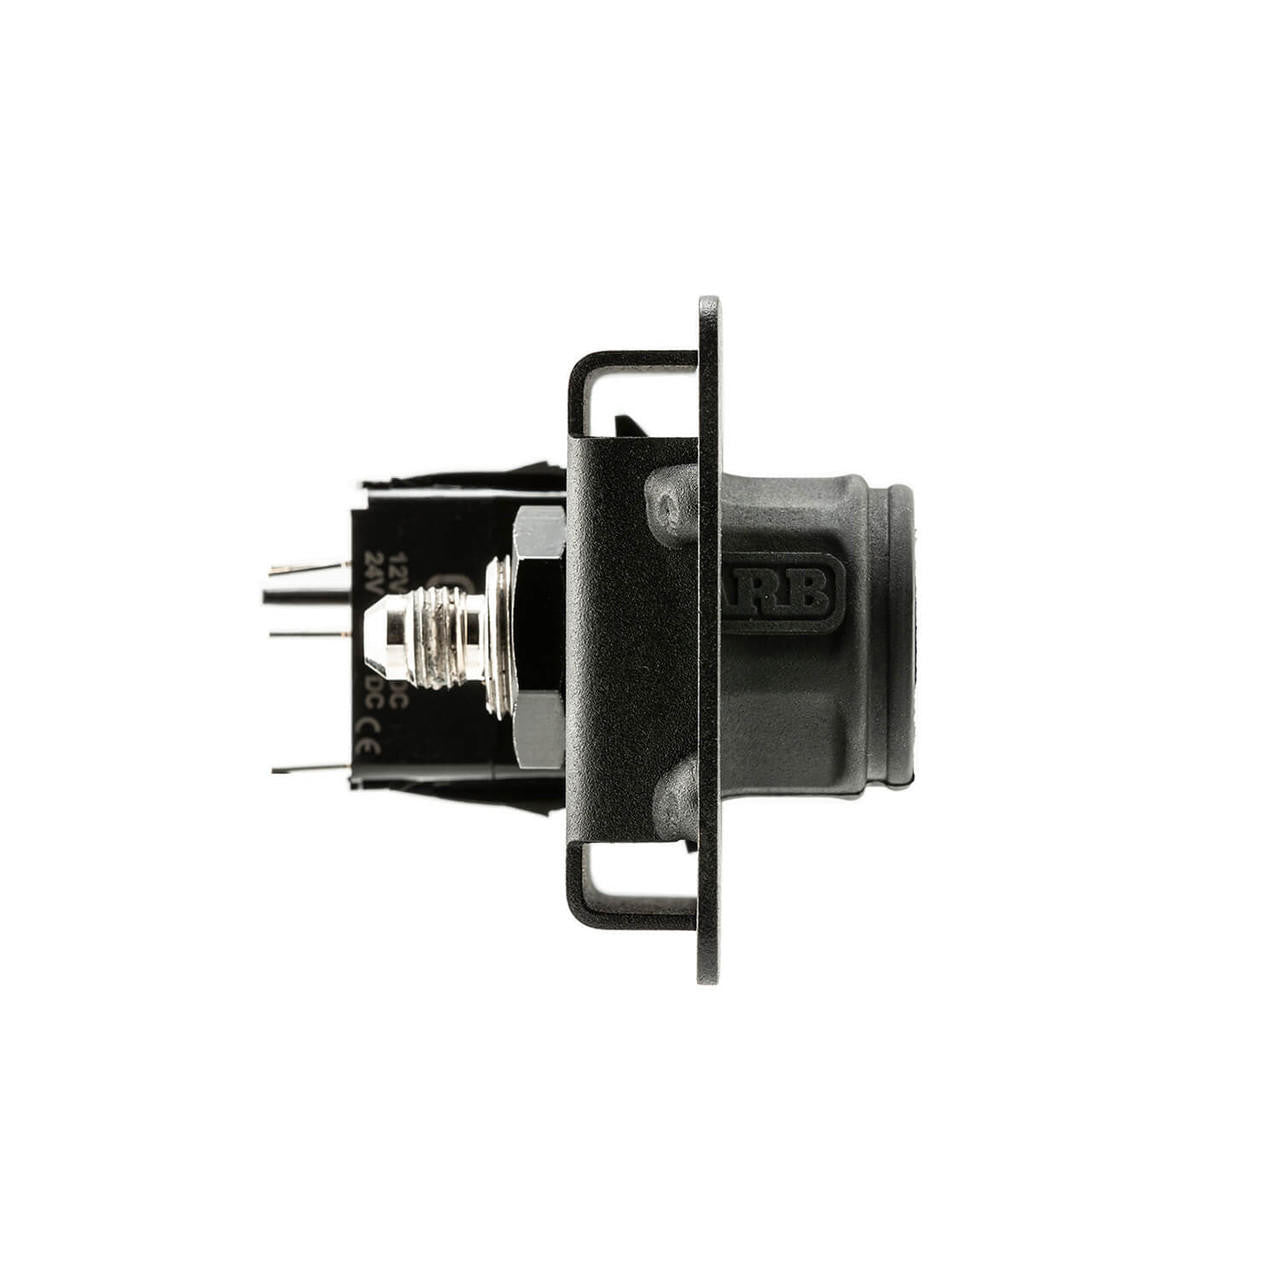  ARB Universal Switch Coupling Bracket 3501050 